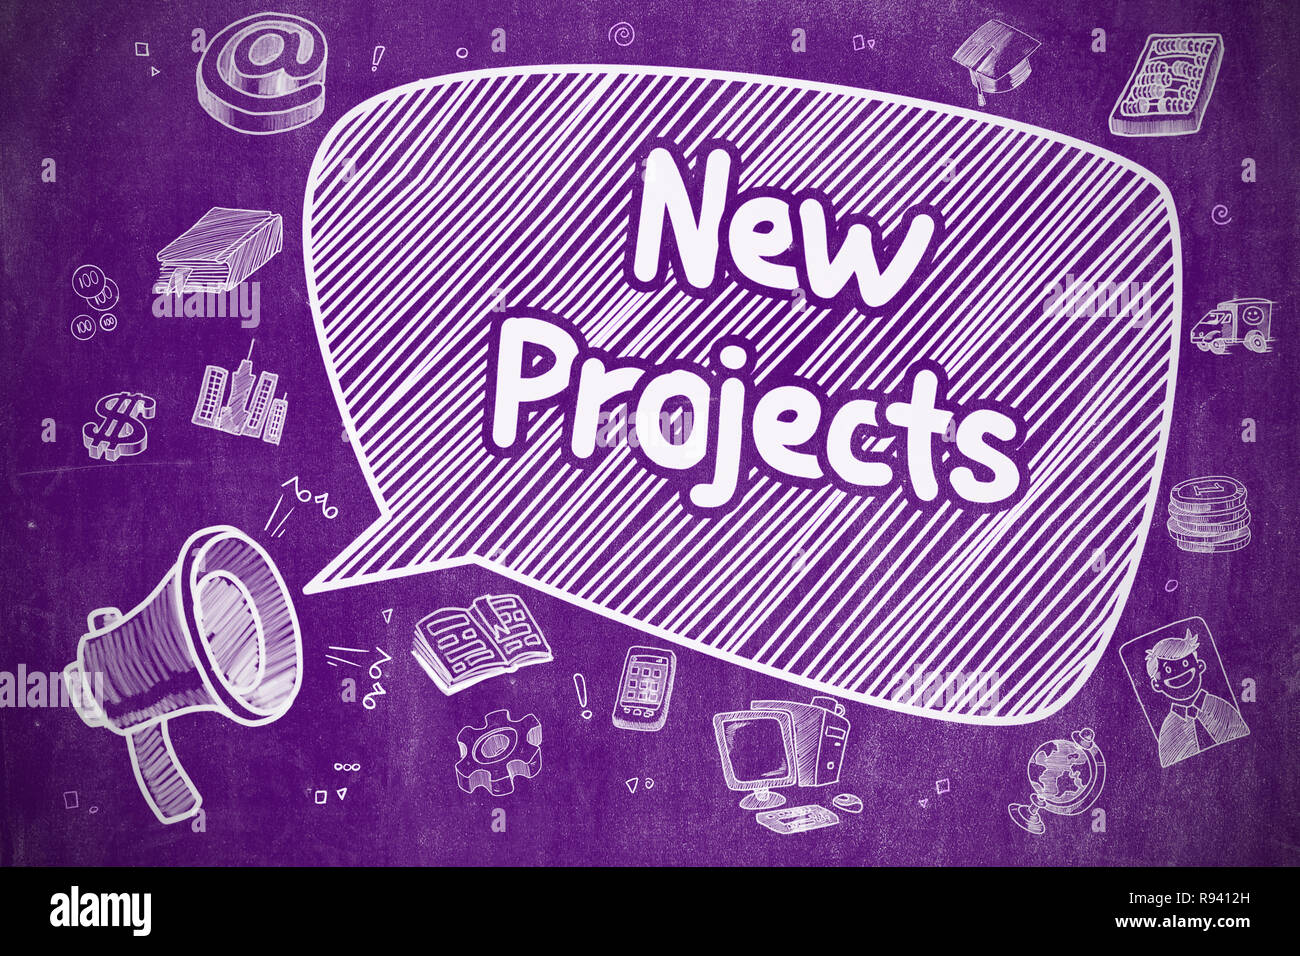 New Projects - Hand Drawn Illustration on Purple Chalkboard. Stock Photo